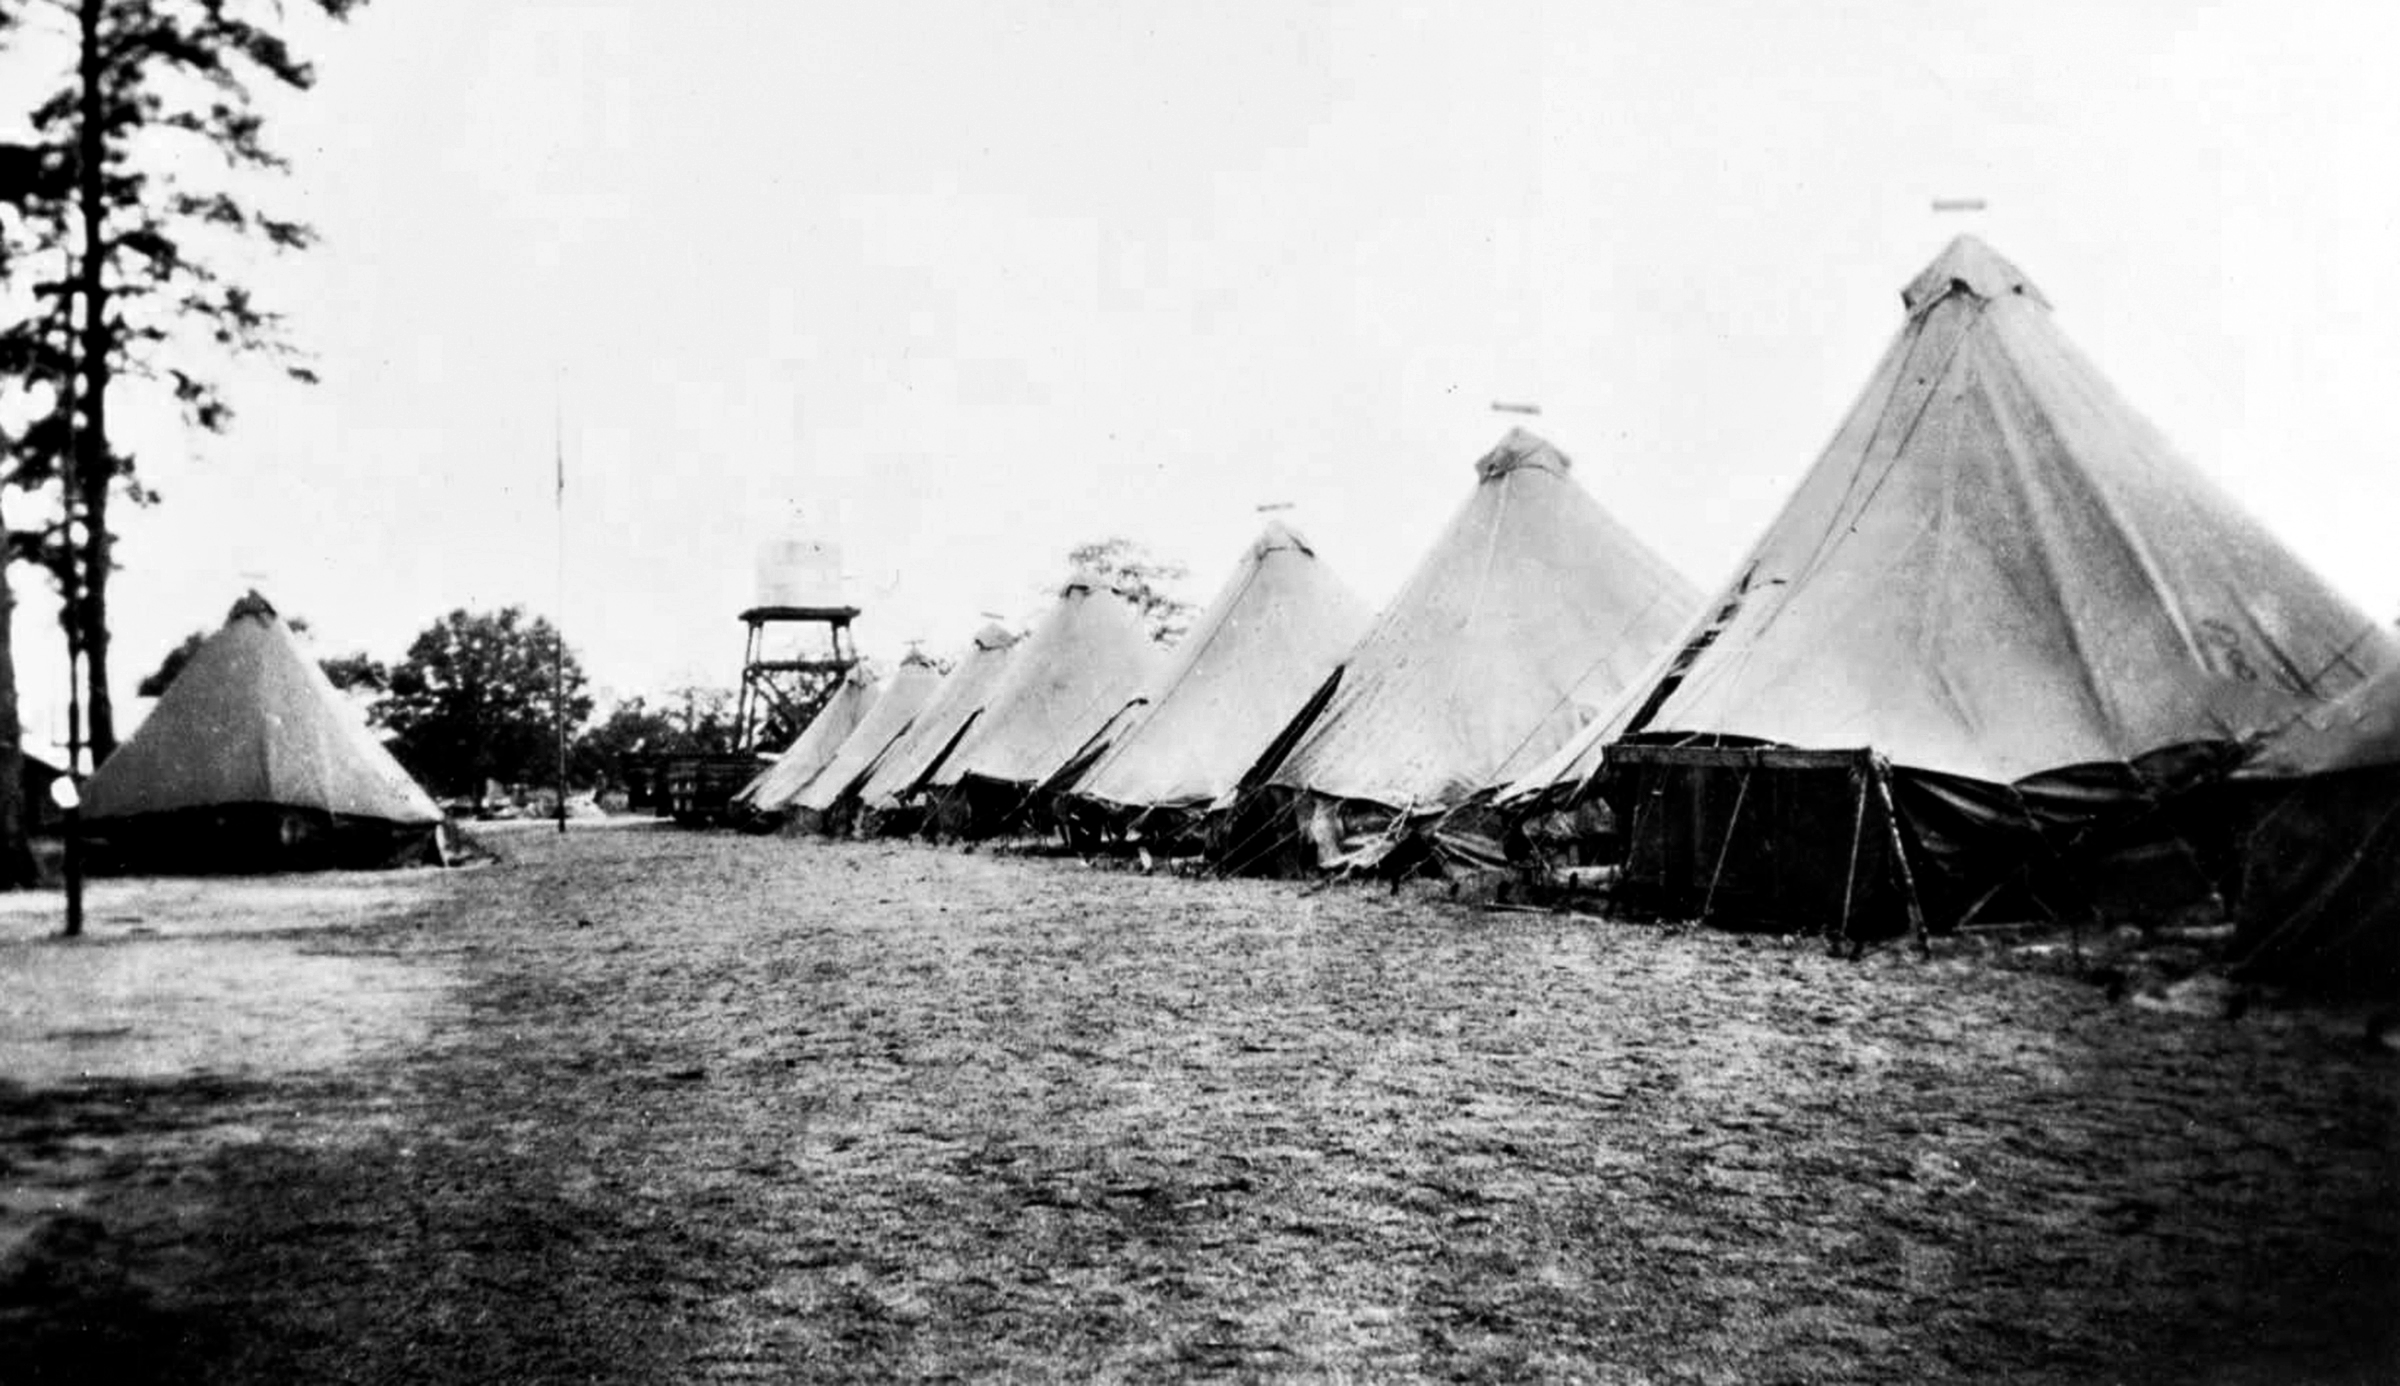 CCC tents